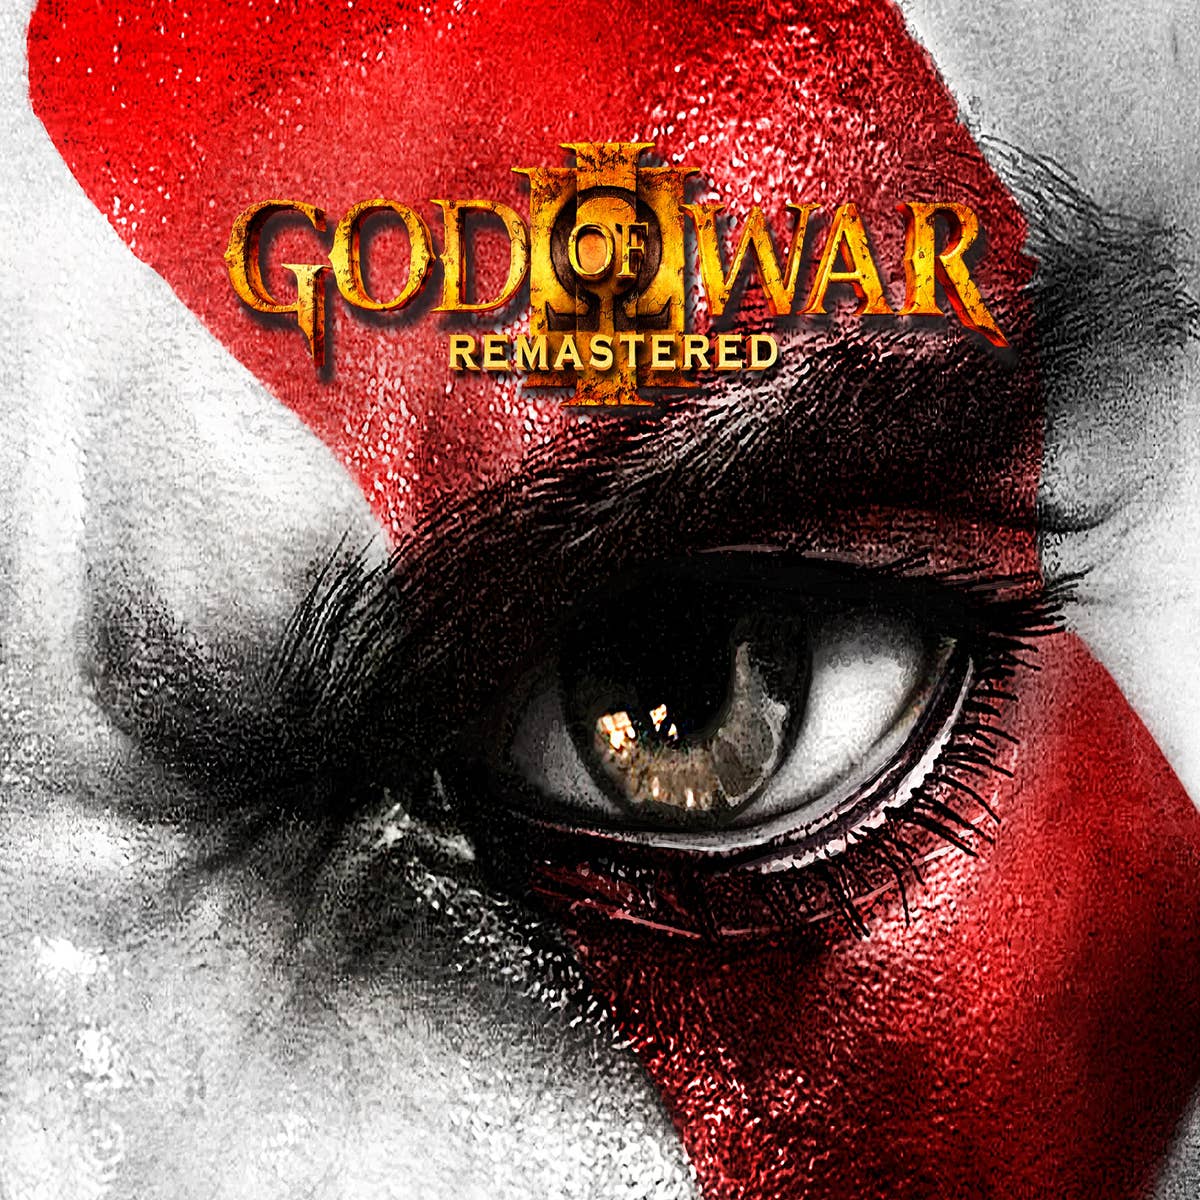 GOD OF WAR 3 Gameplay Walkthrough Part 1 FULL GAME [4K